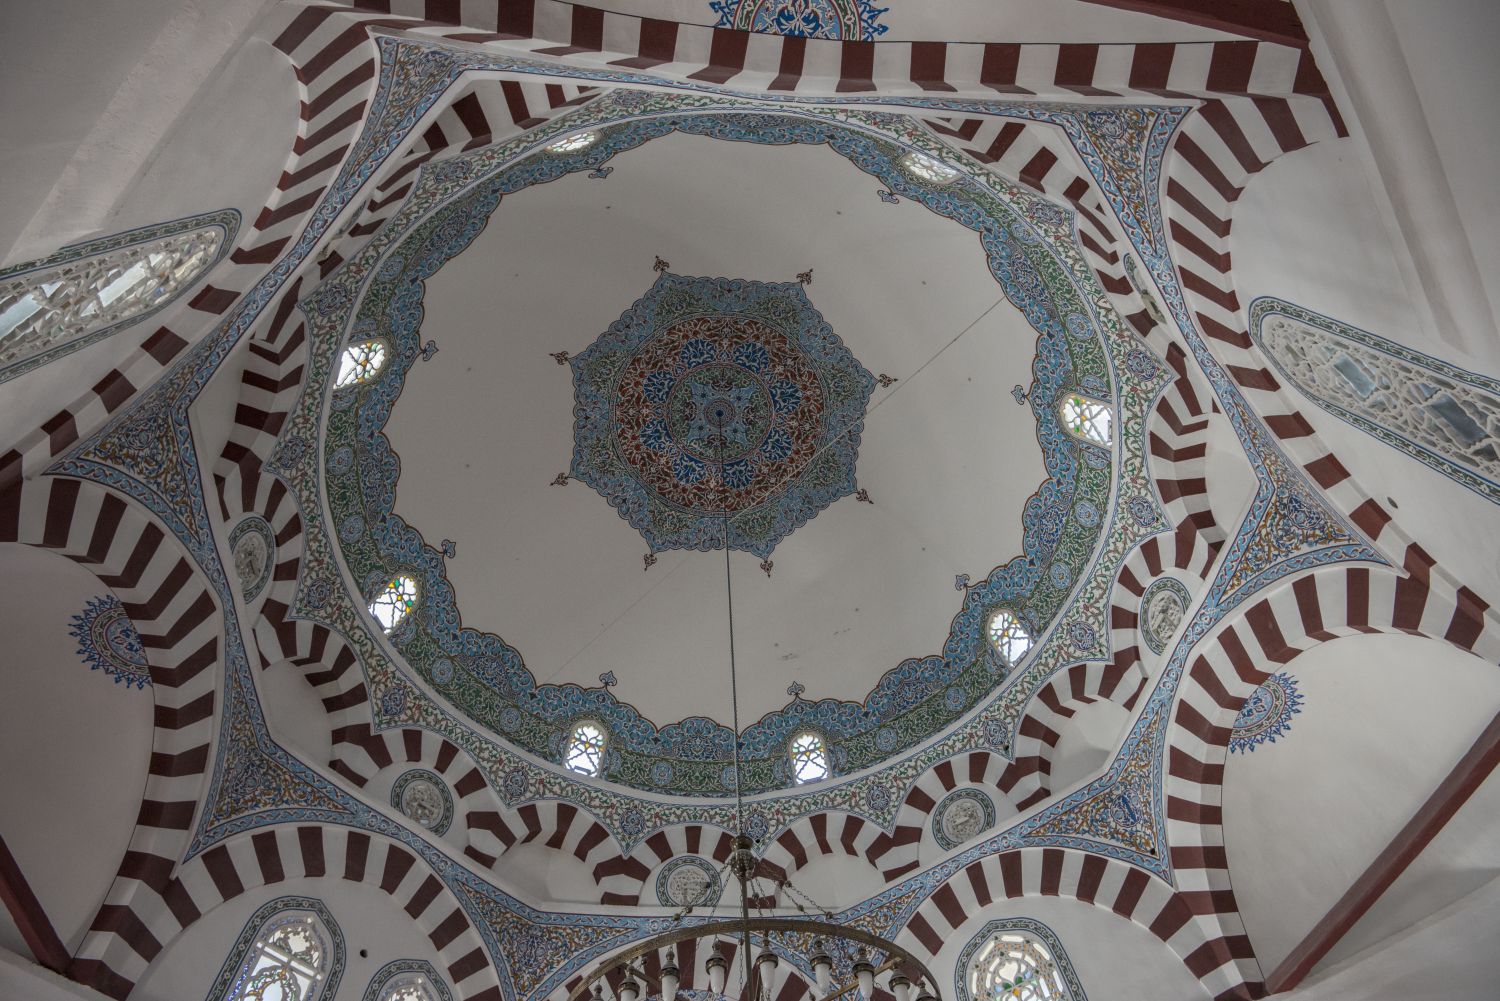 Interior view of dome.